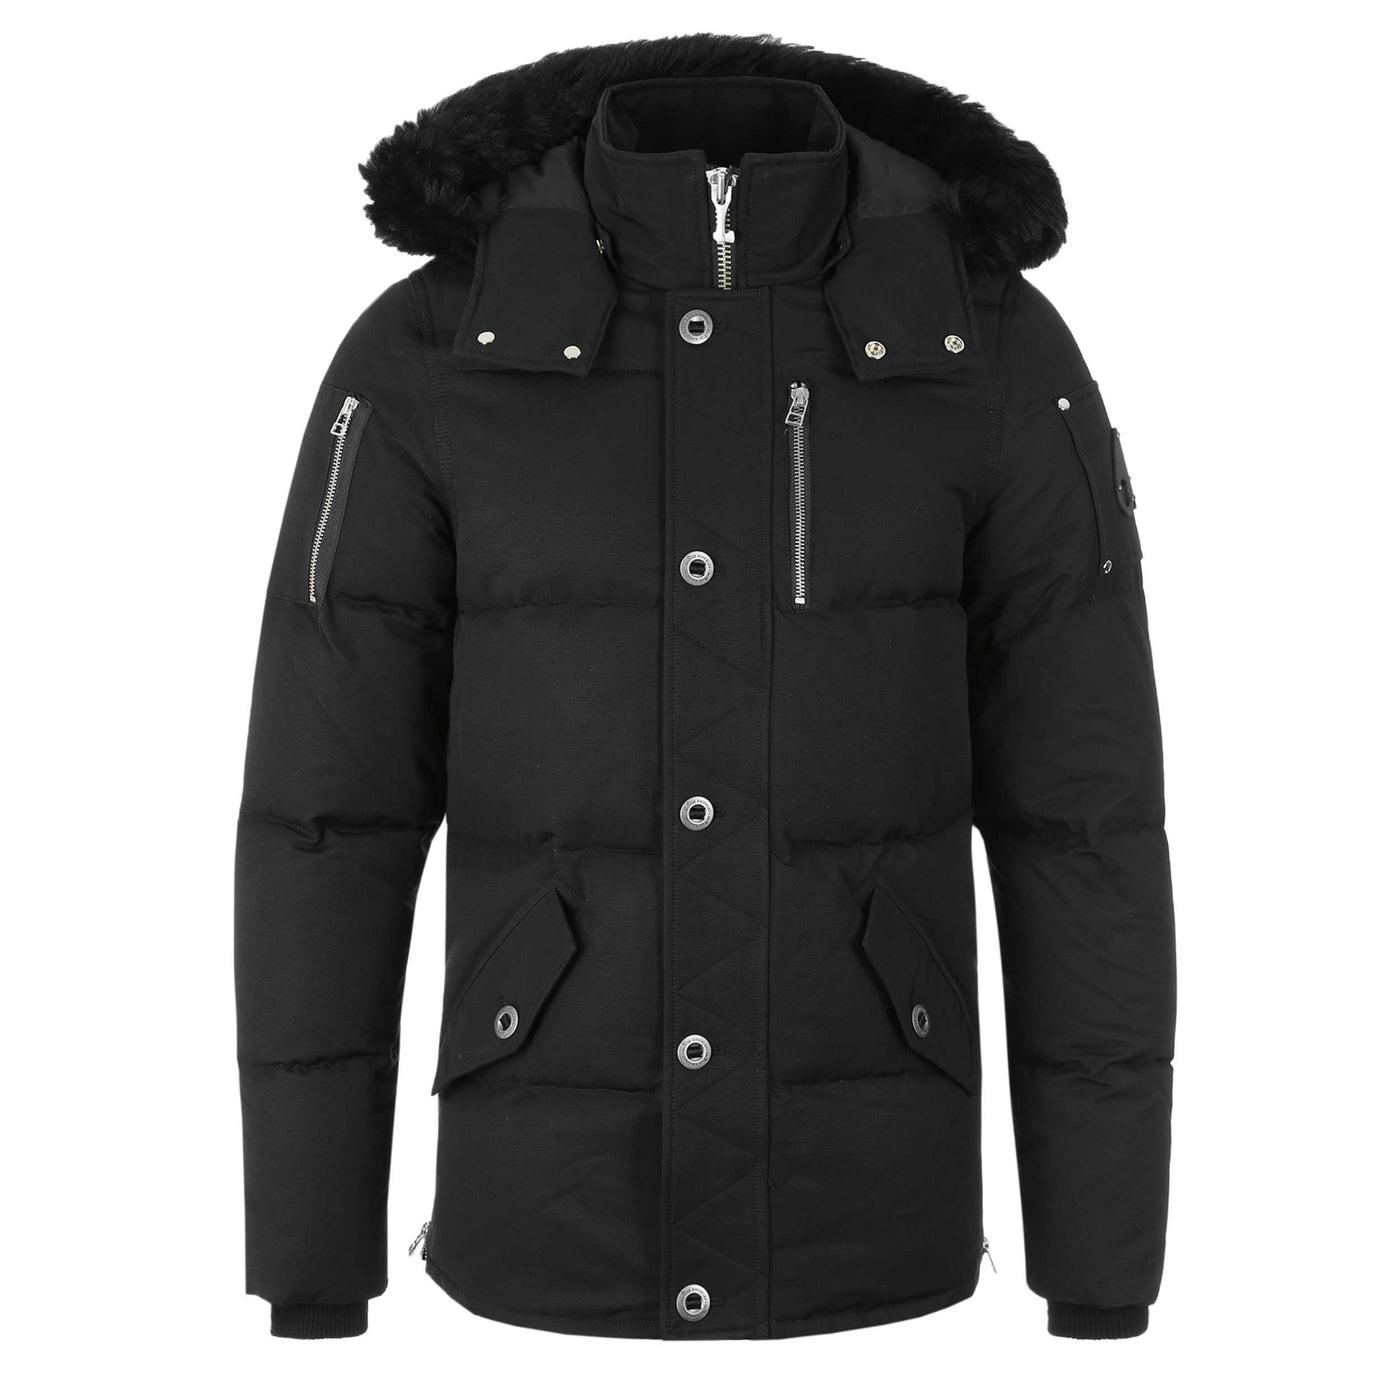 Moose Knuckles 3Q Jacket in Black & Black Fur